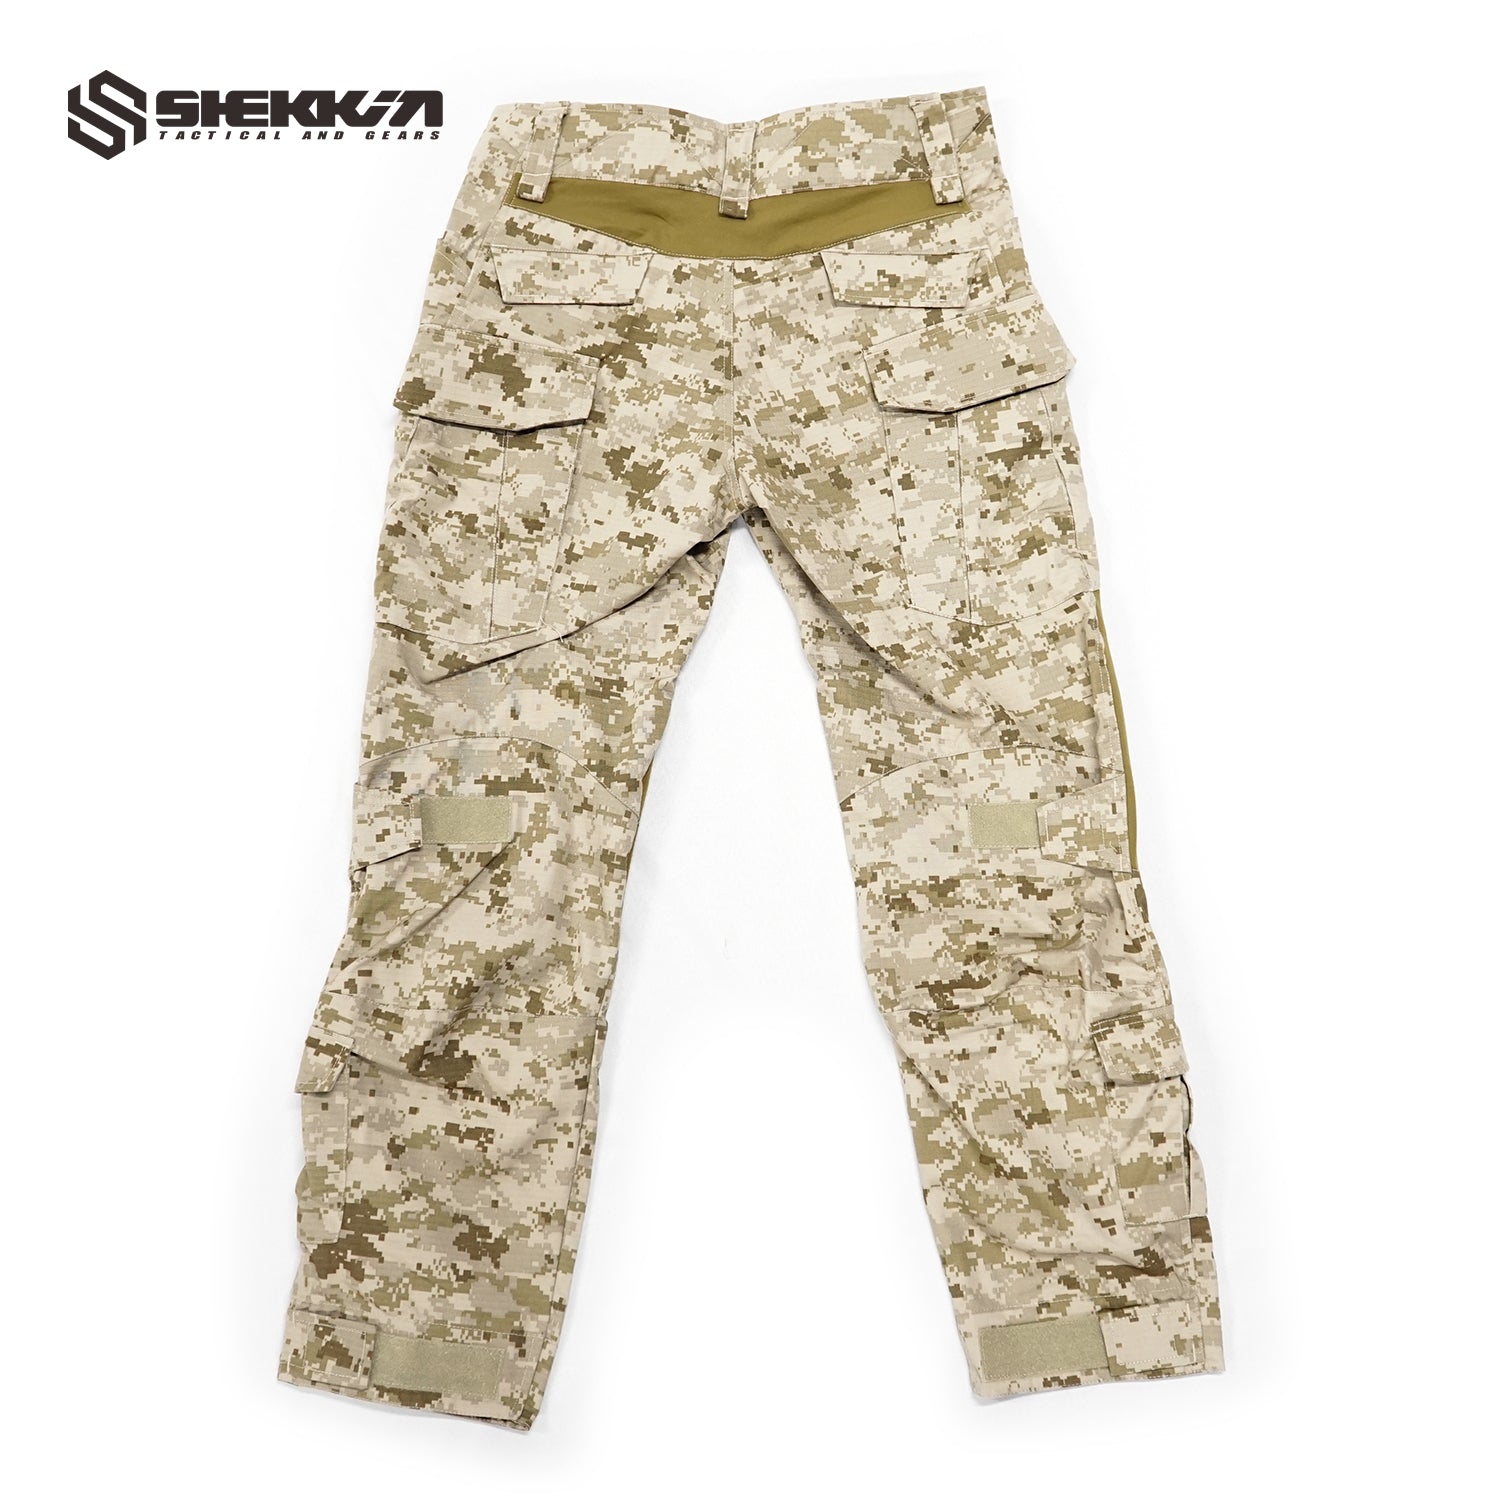 AOR1 Navy cut gen2 combat pants - Shekkin Gears